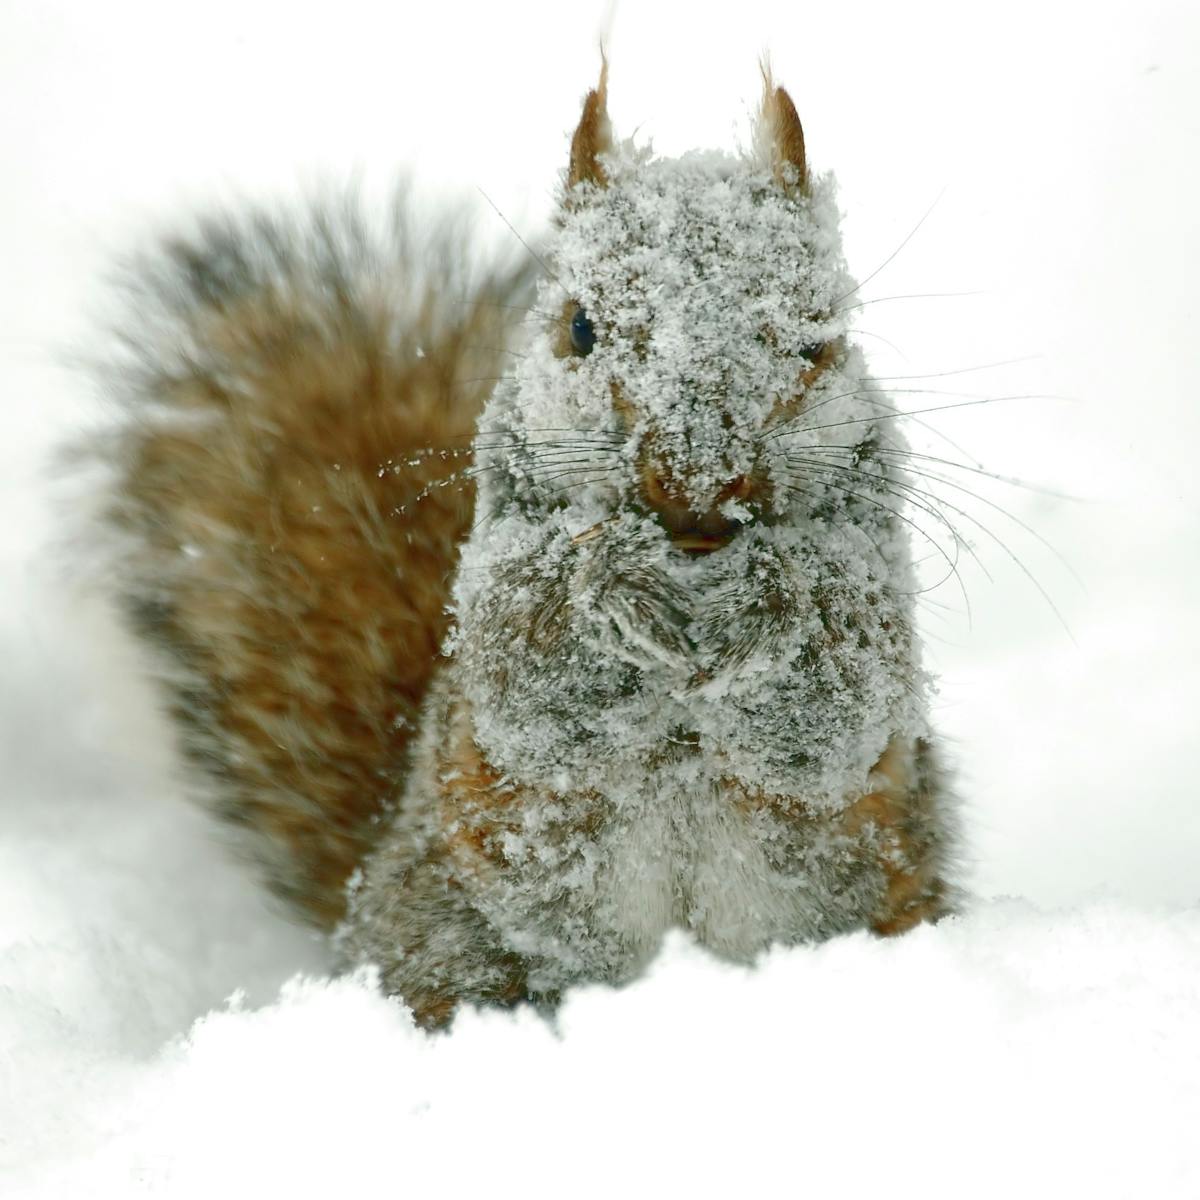 Is winter miserable for wildlife?